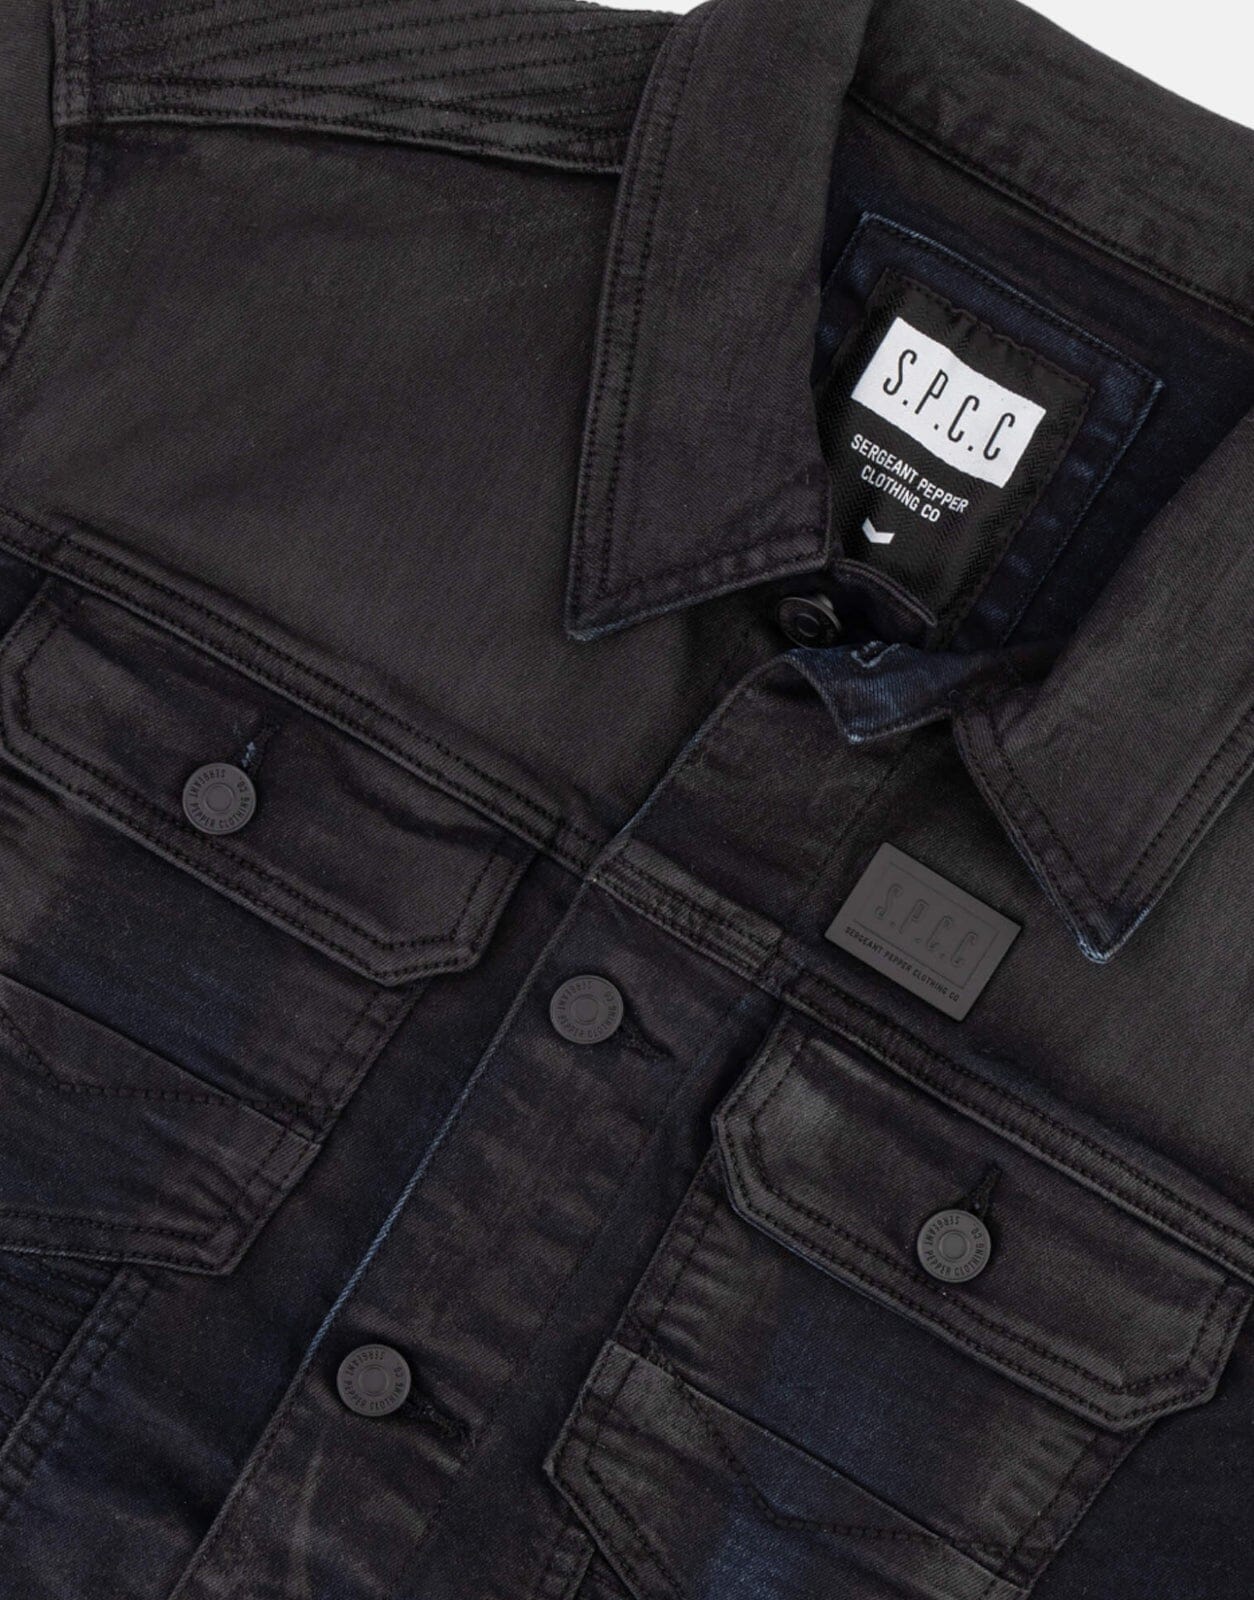 SPCC Maverick Black Jacket - Subwear